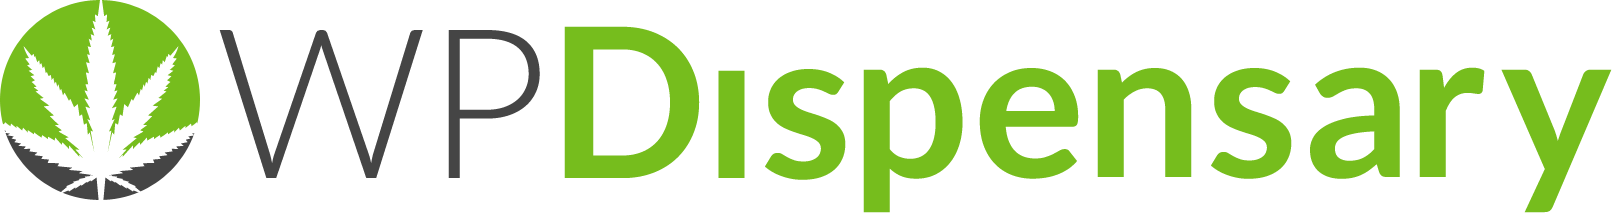 wpdispensary-logo-updated